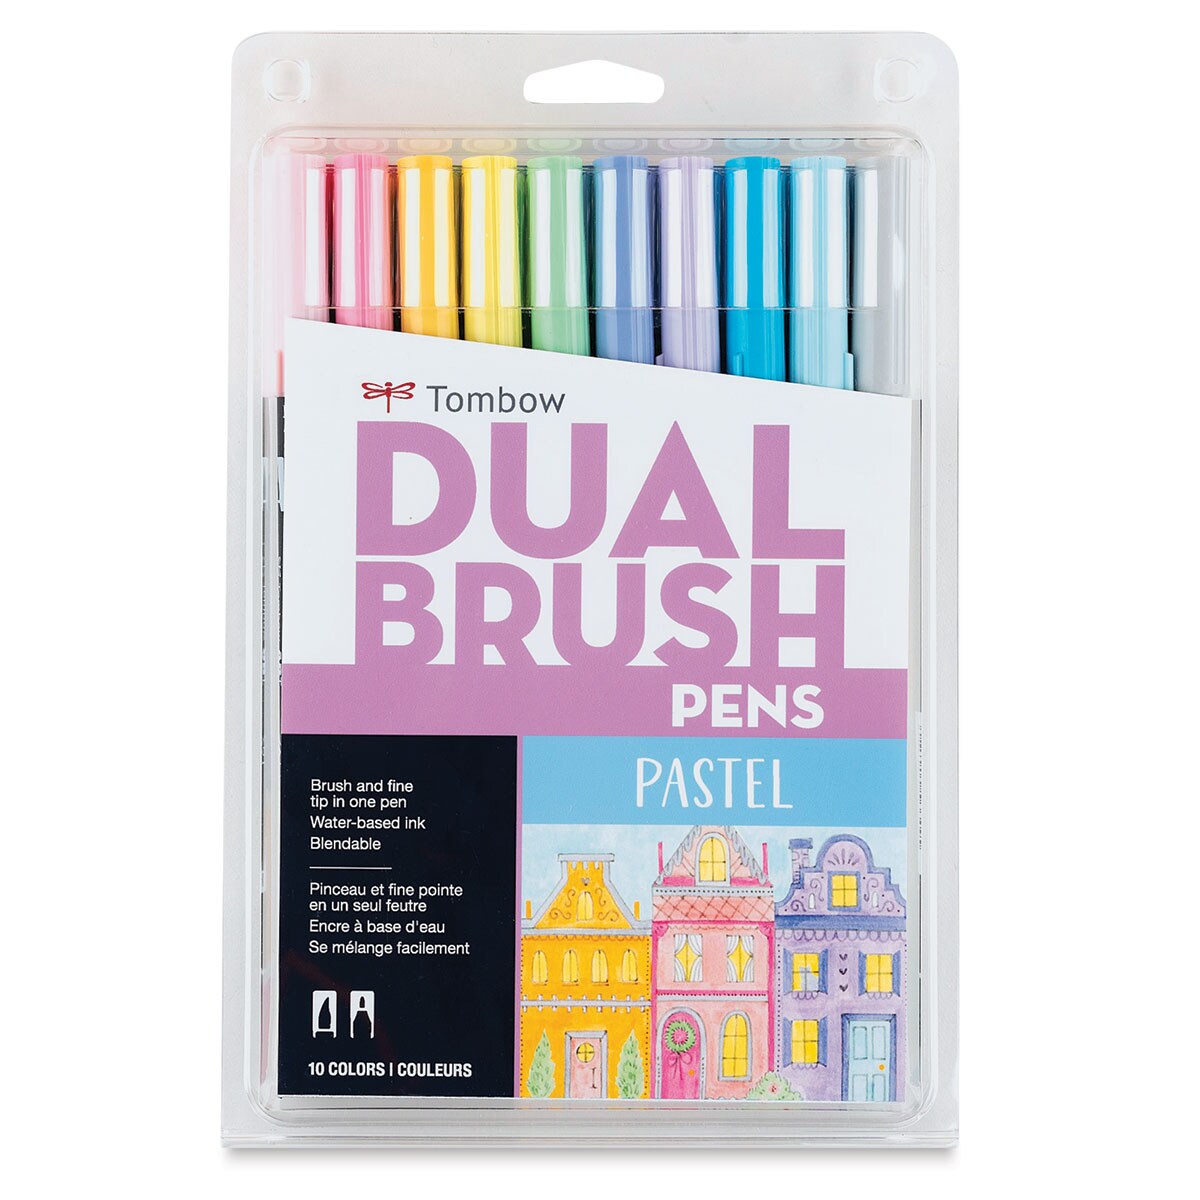 Tombow Dual Brush Pens - Pastel Colors, Set of 10